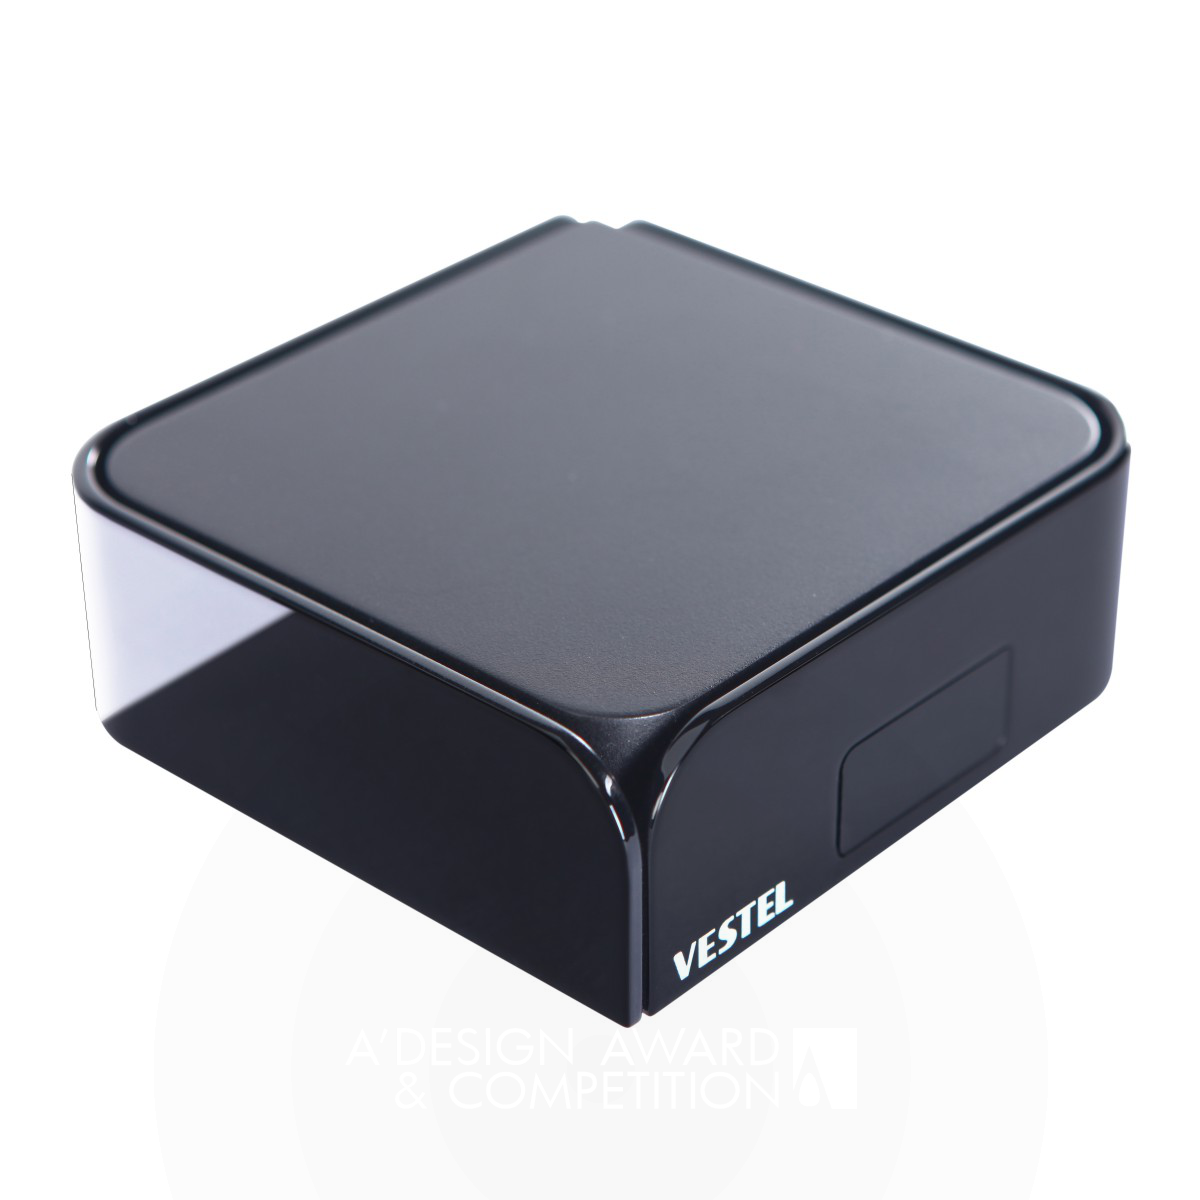 Avoi Set Top Box Digital video broadcasting device by Vestel ID Team